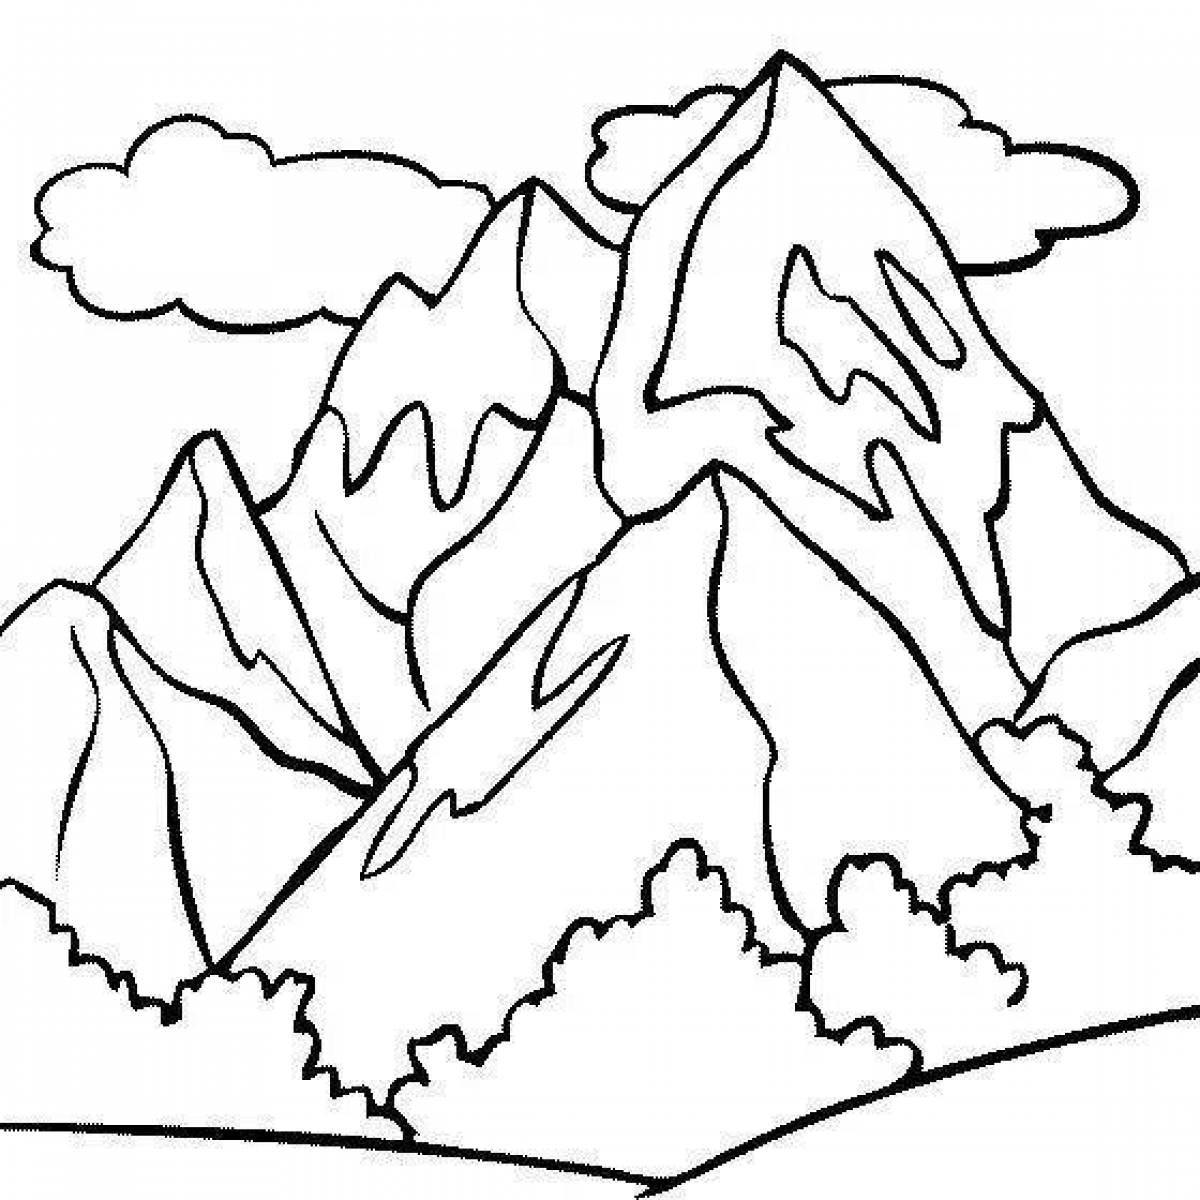 Coloring book wonderful mountain landscape